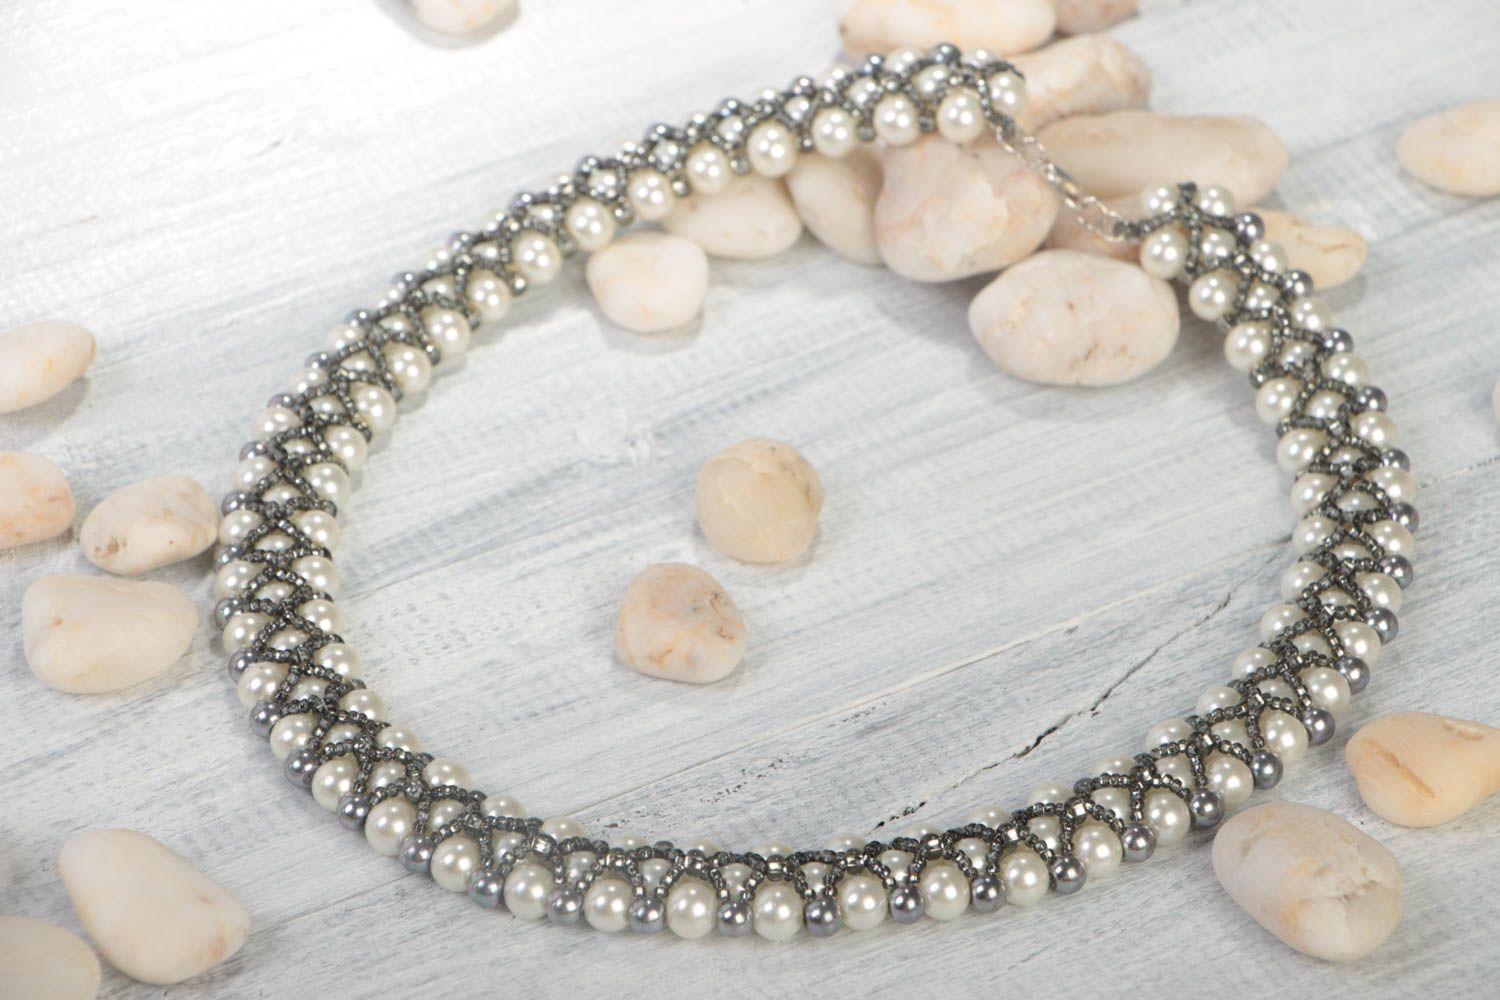 Handmade beaded necklace unusual designer accessory stylish beautiful jewelry photo 1